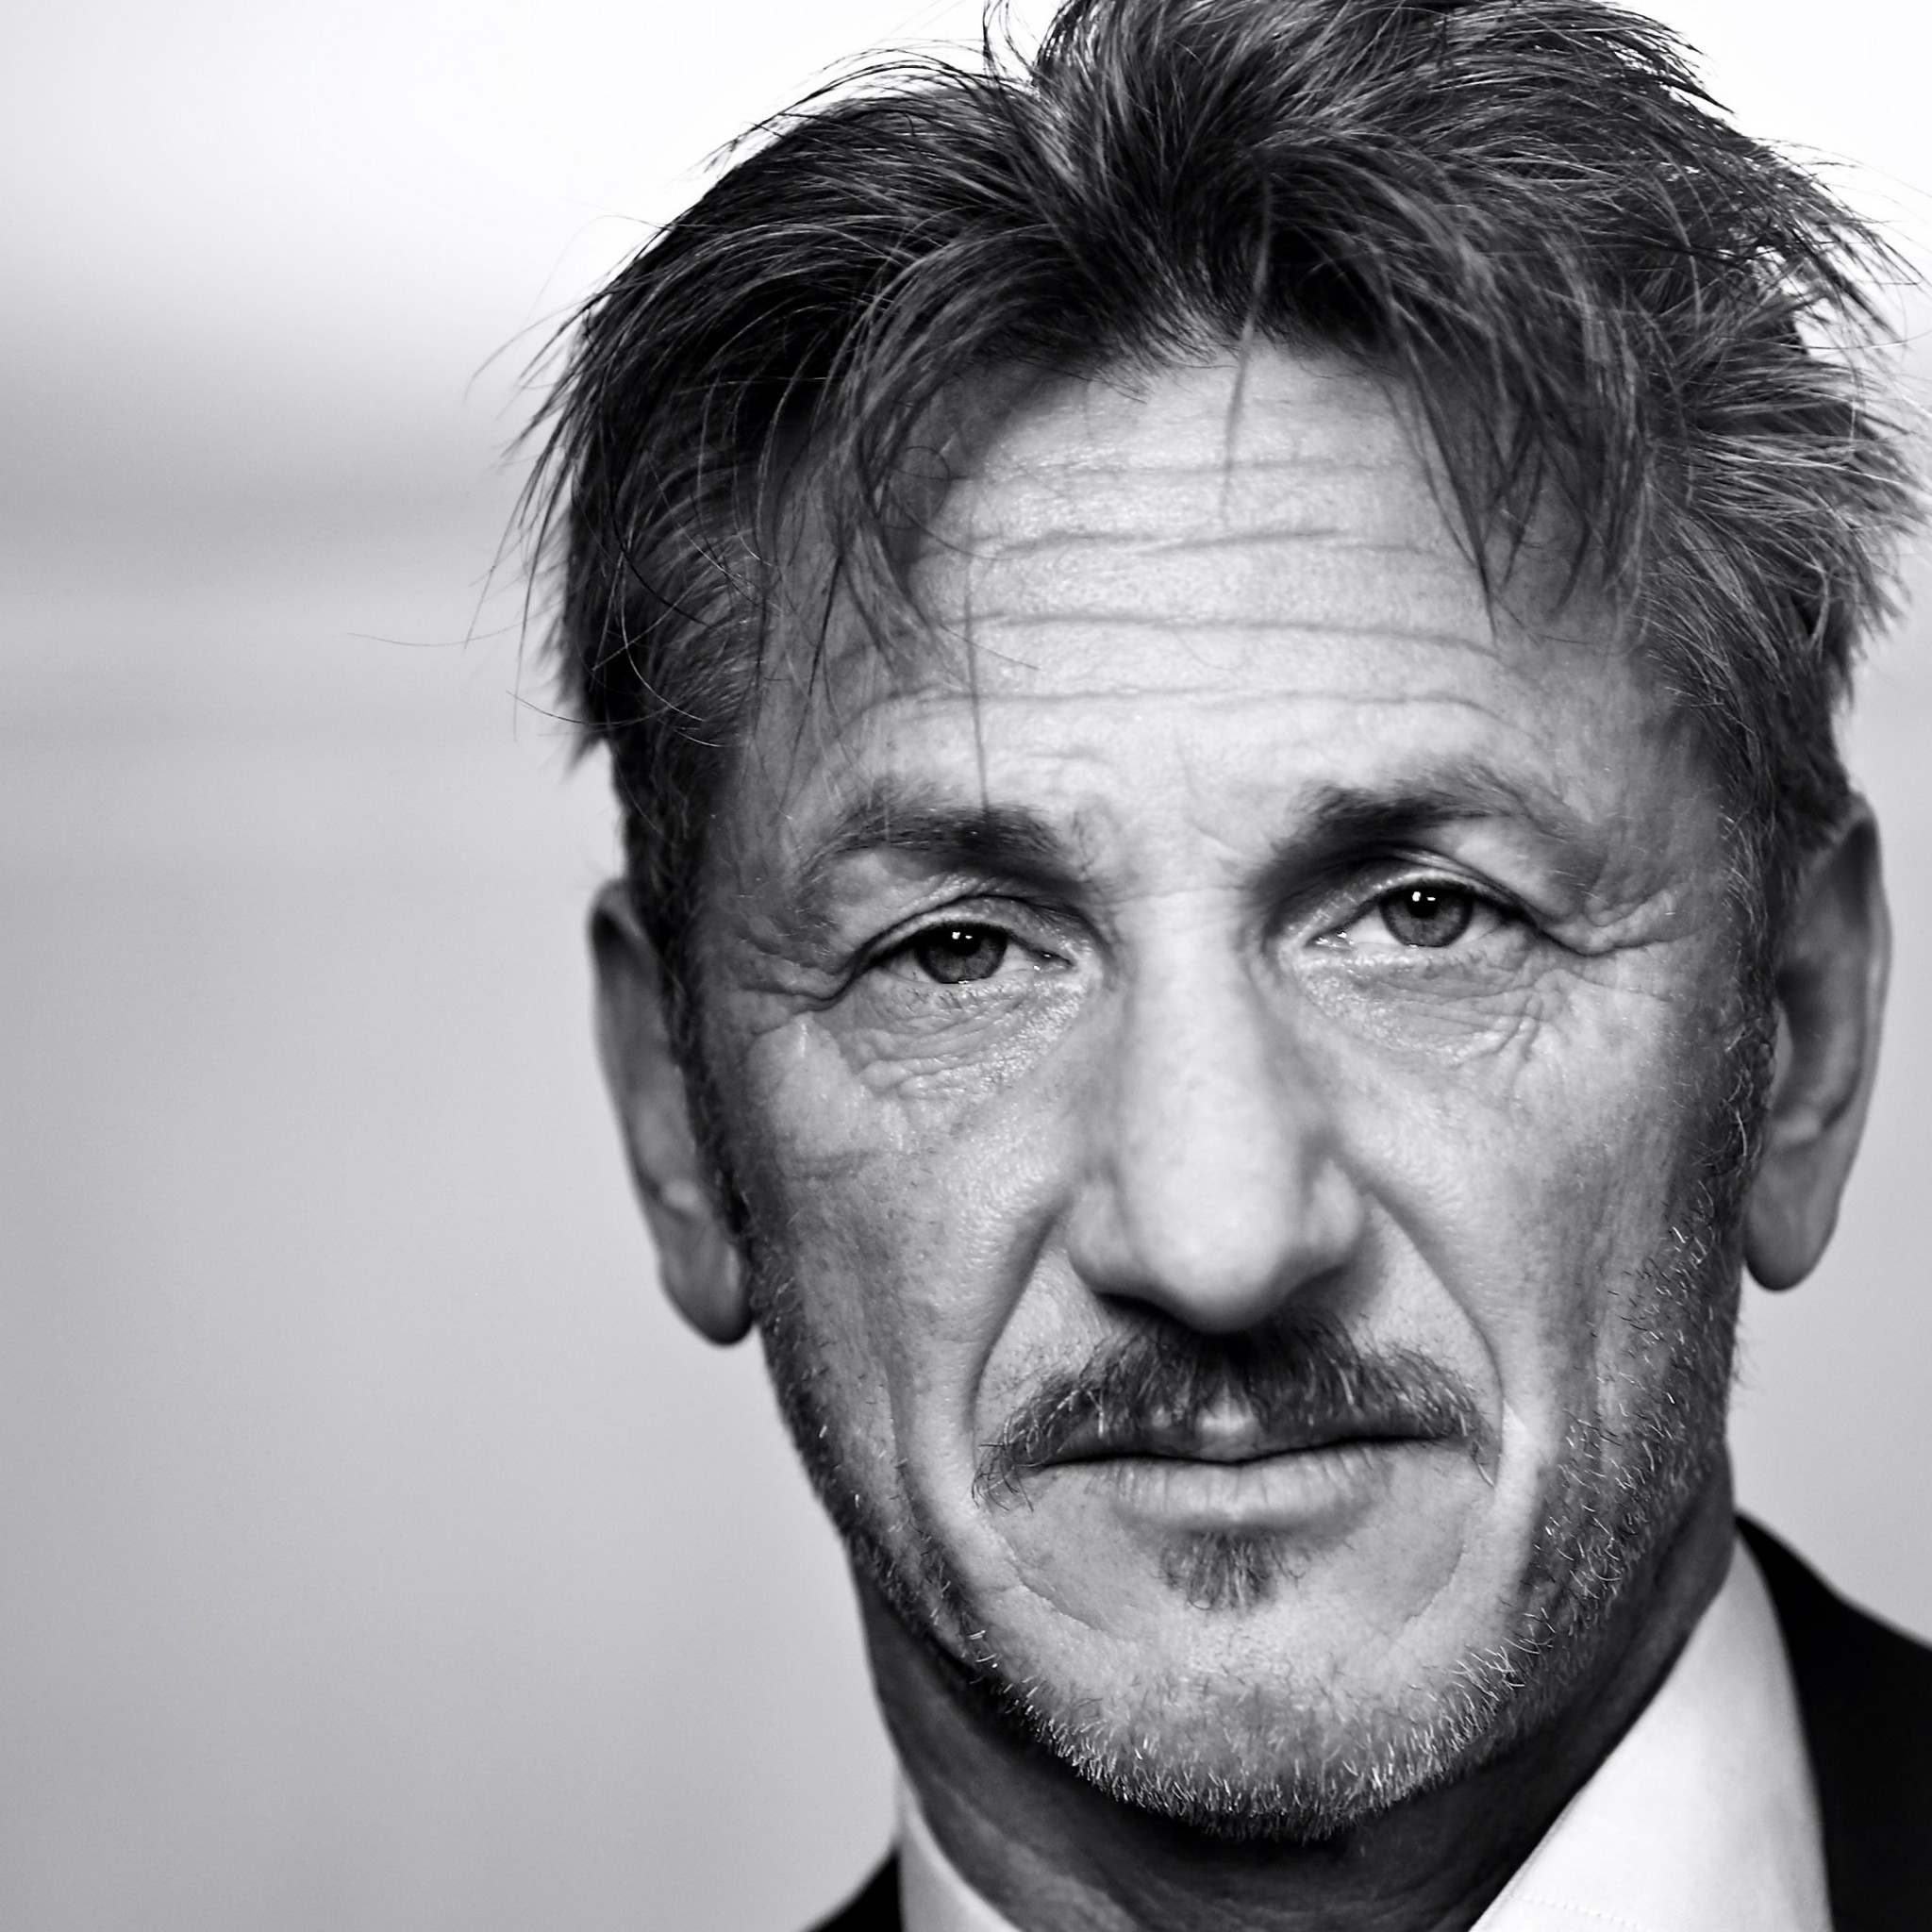 Sean Penn Portrait in Black & White Wallpaper for Google Nexus 9